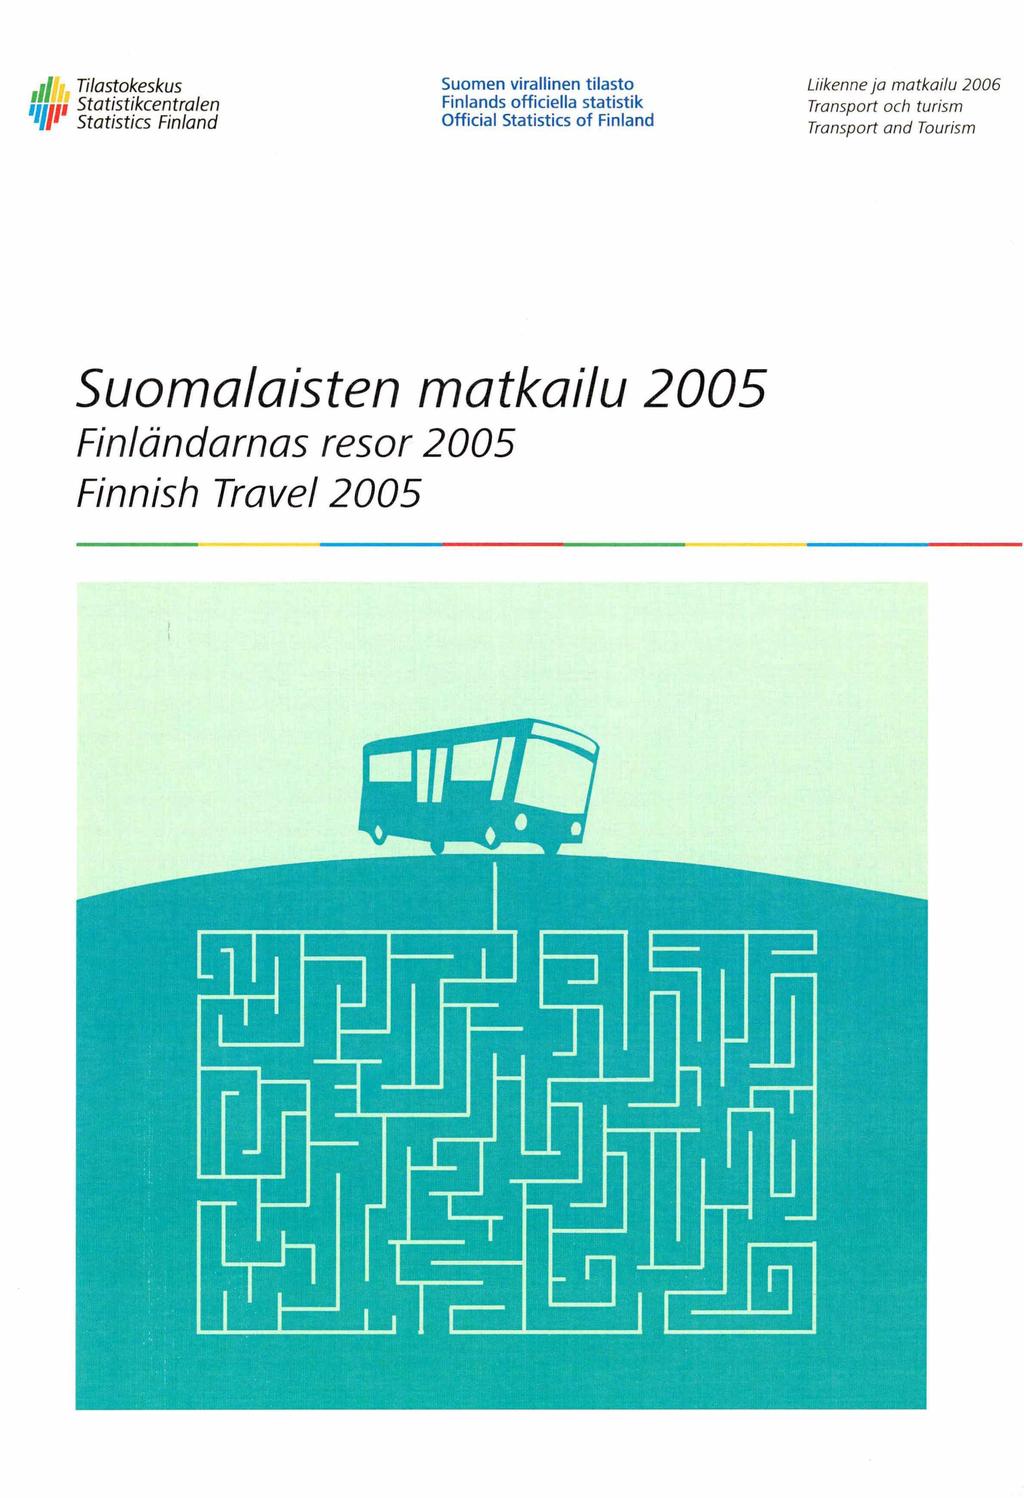 Tilastokeskus m m Statistikcentralen 'll' Statistics Finland Liikenne ja matkailu 2006 Transport